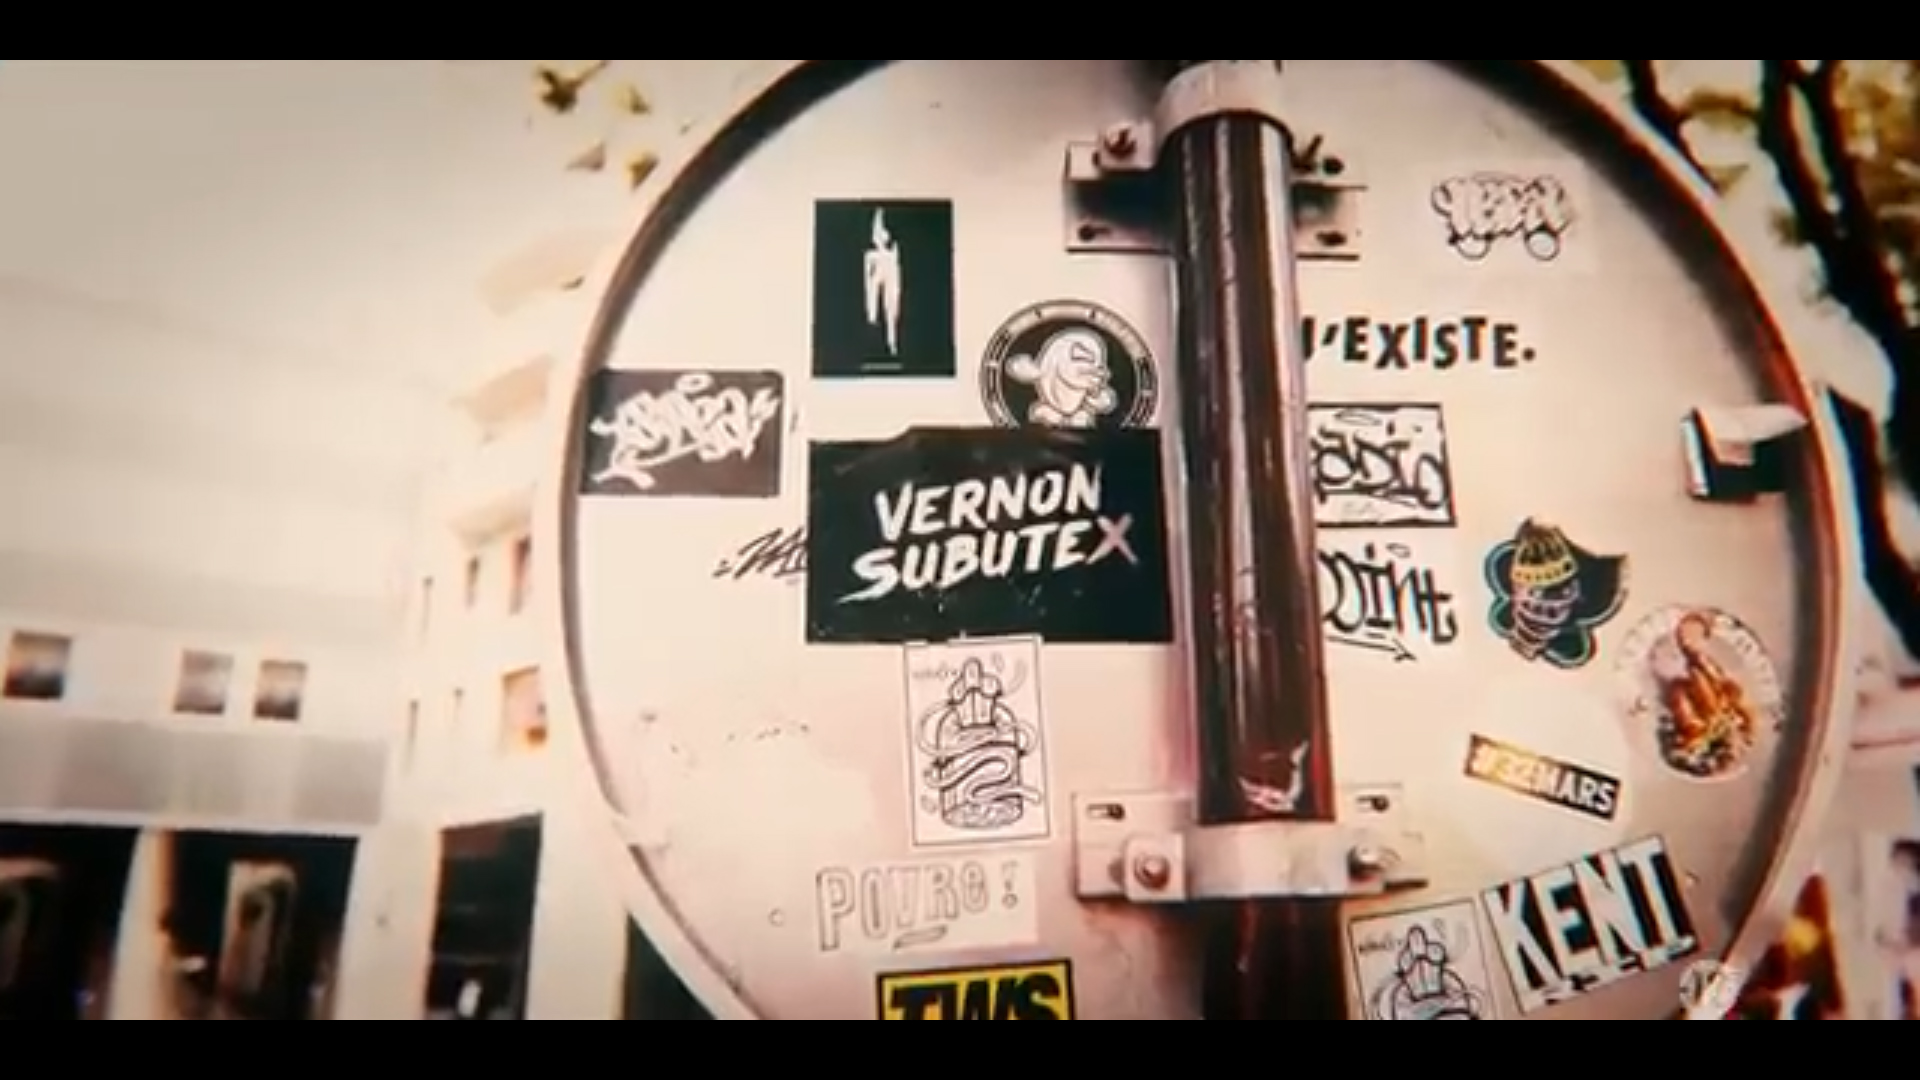 vernon-subutex-street-art-sticker-stickers-j-existe